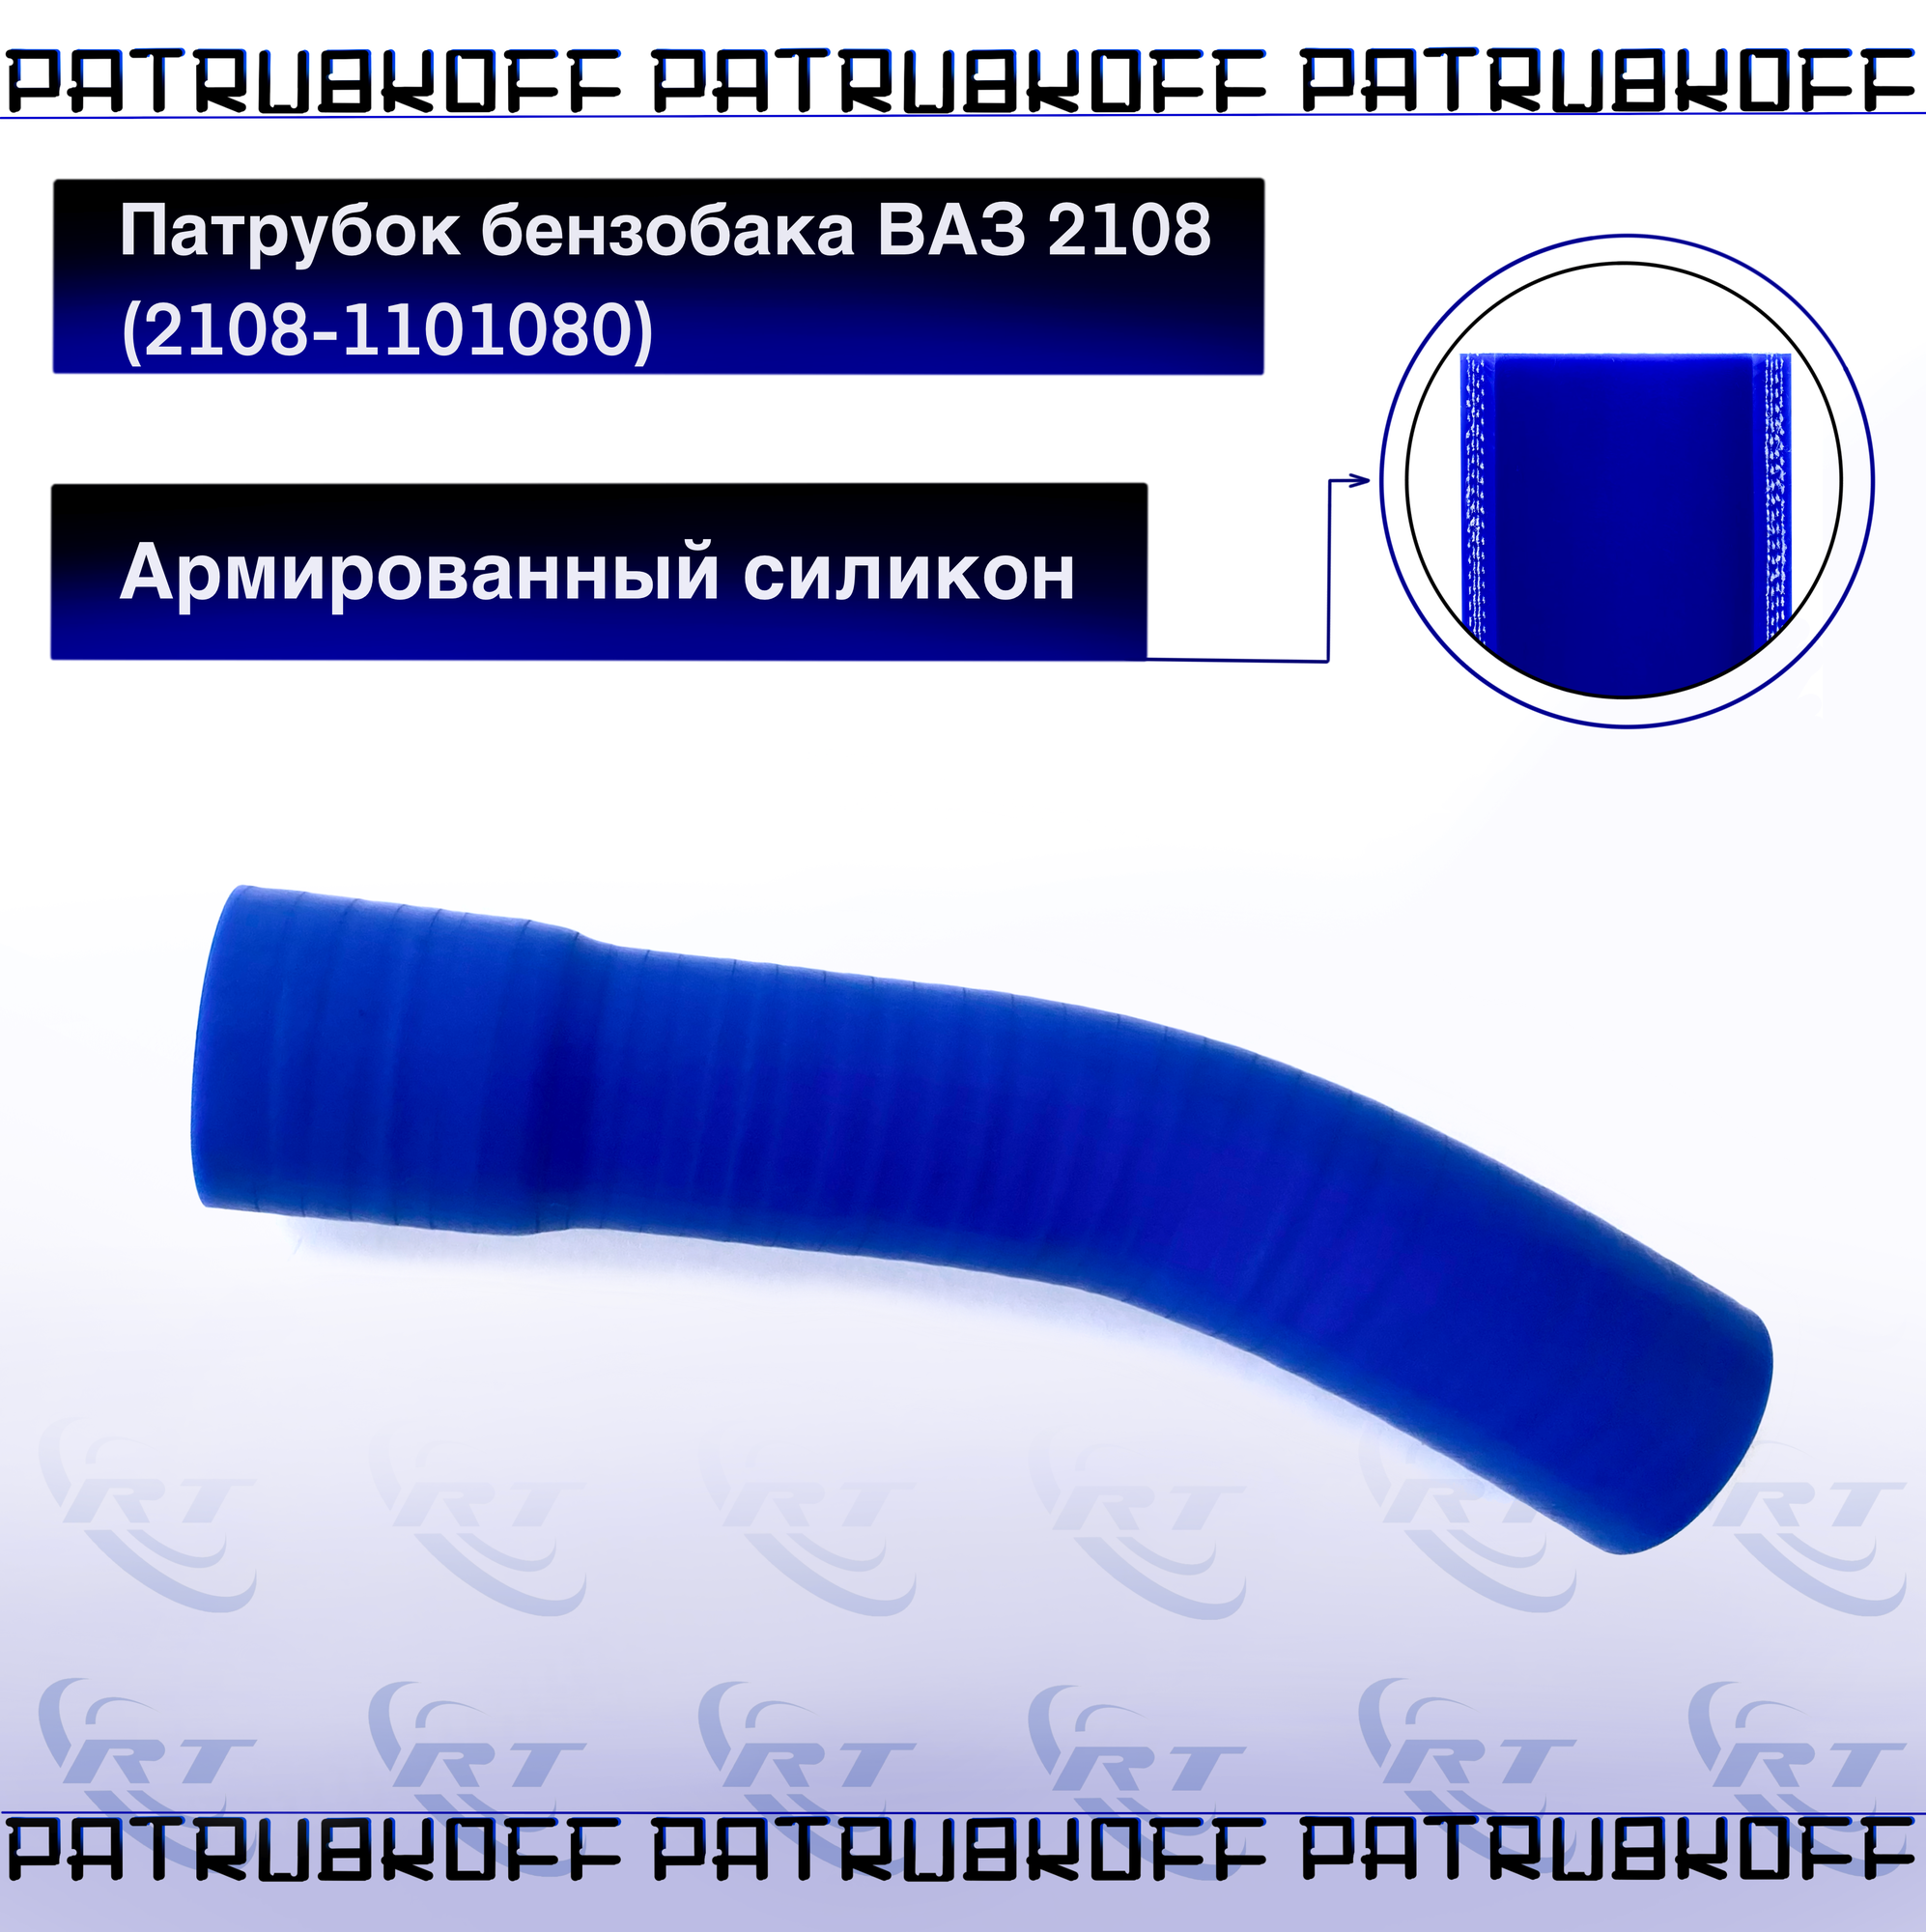 Патрубок бензобака ВАЗ 2108 (2108-1101080) армированный силикон синий / РусТех